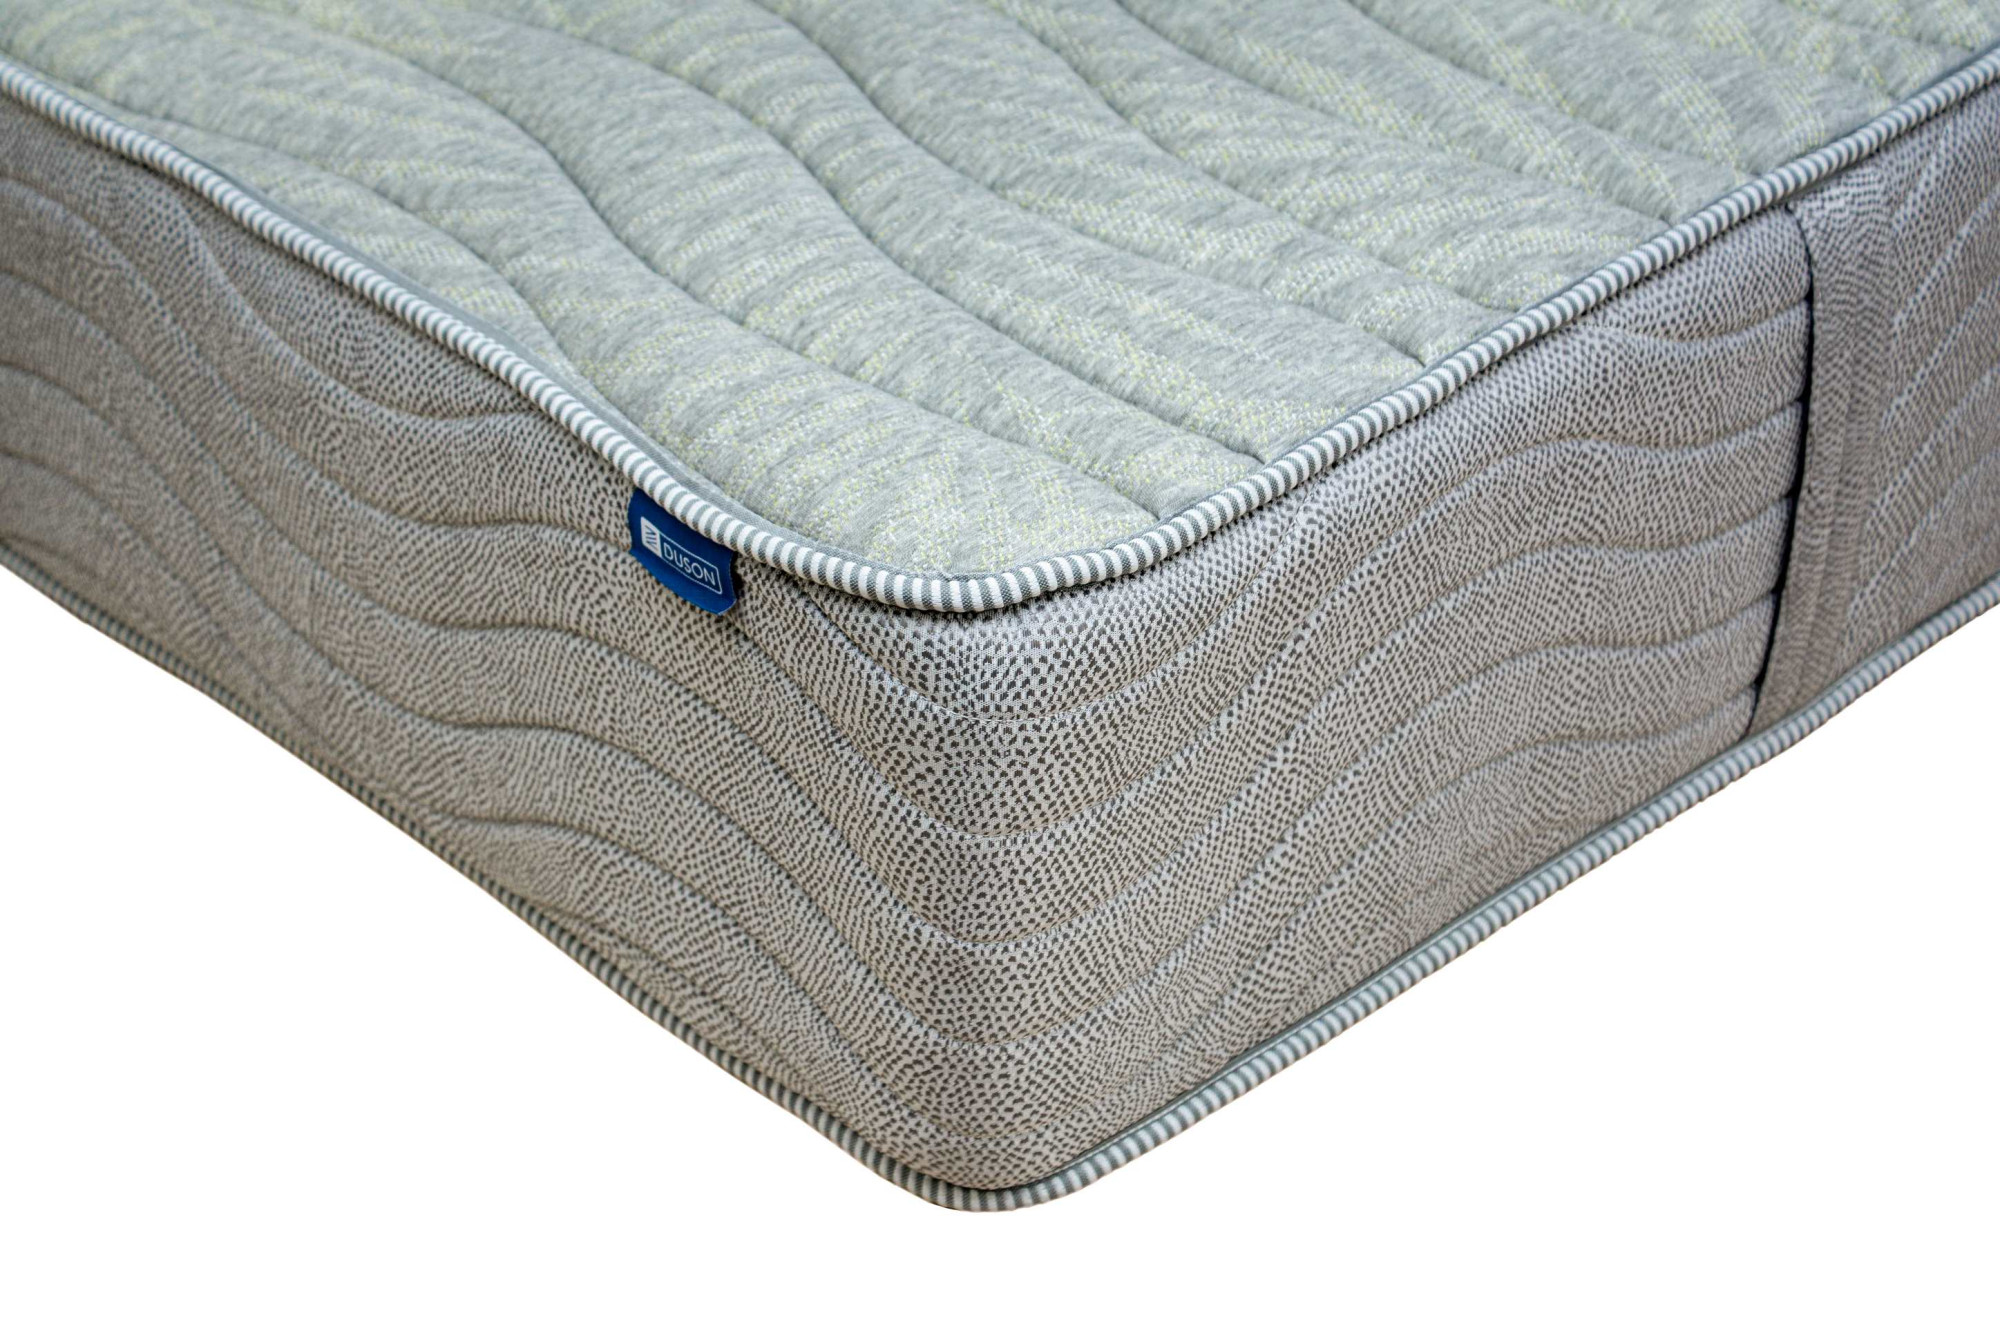 Orthopedic mattress Miami Soft-Hard 180x200 hard, 31cm